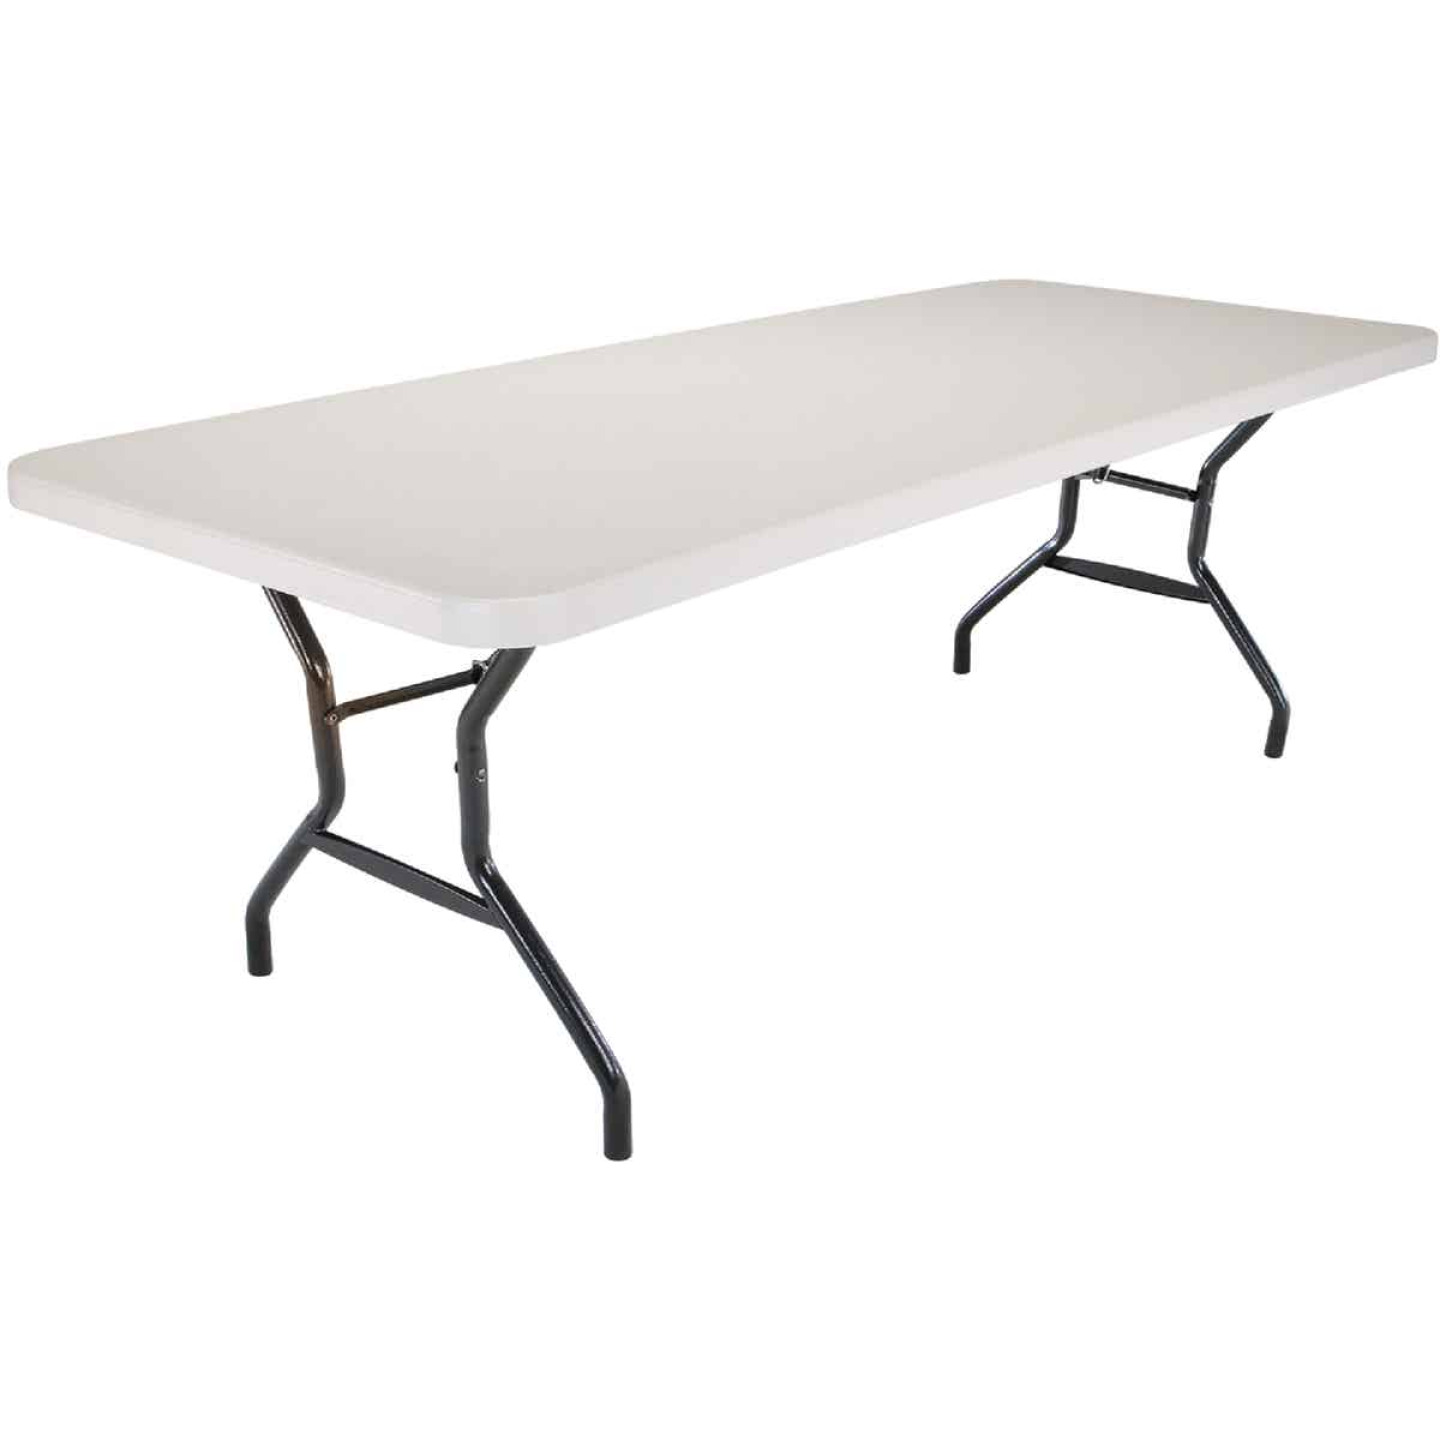 8' WHITE FOLDING TABLE